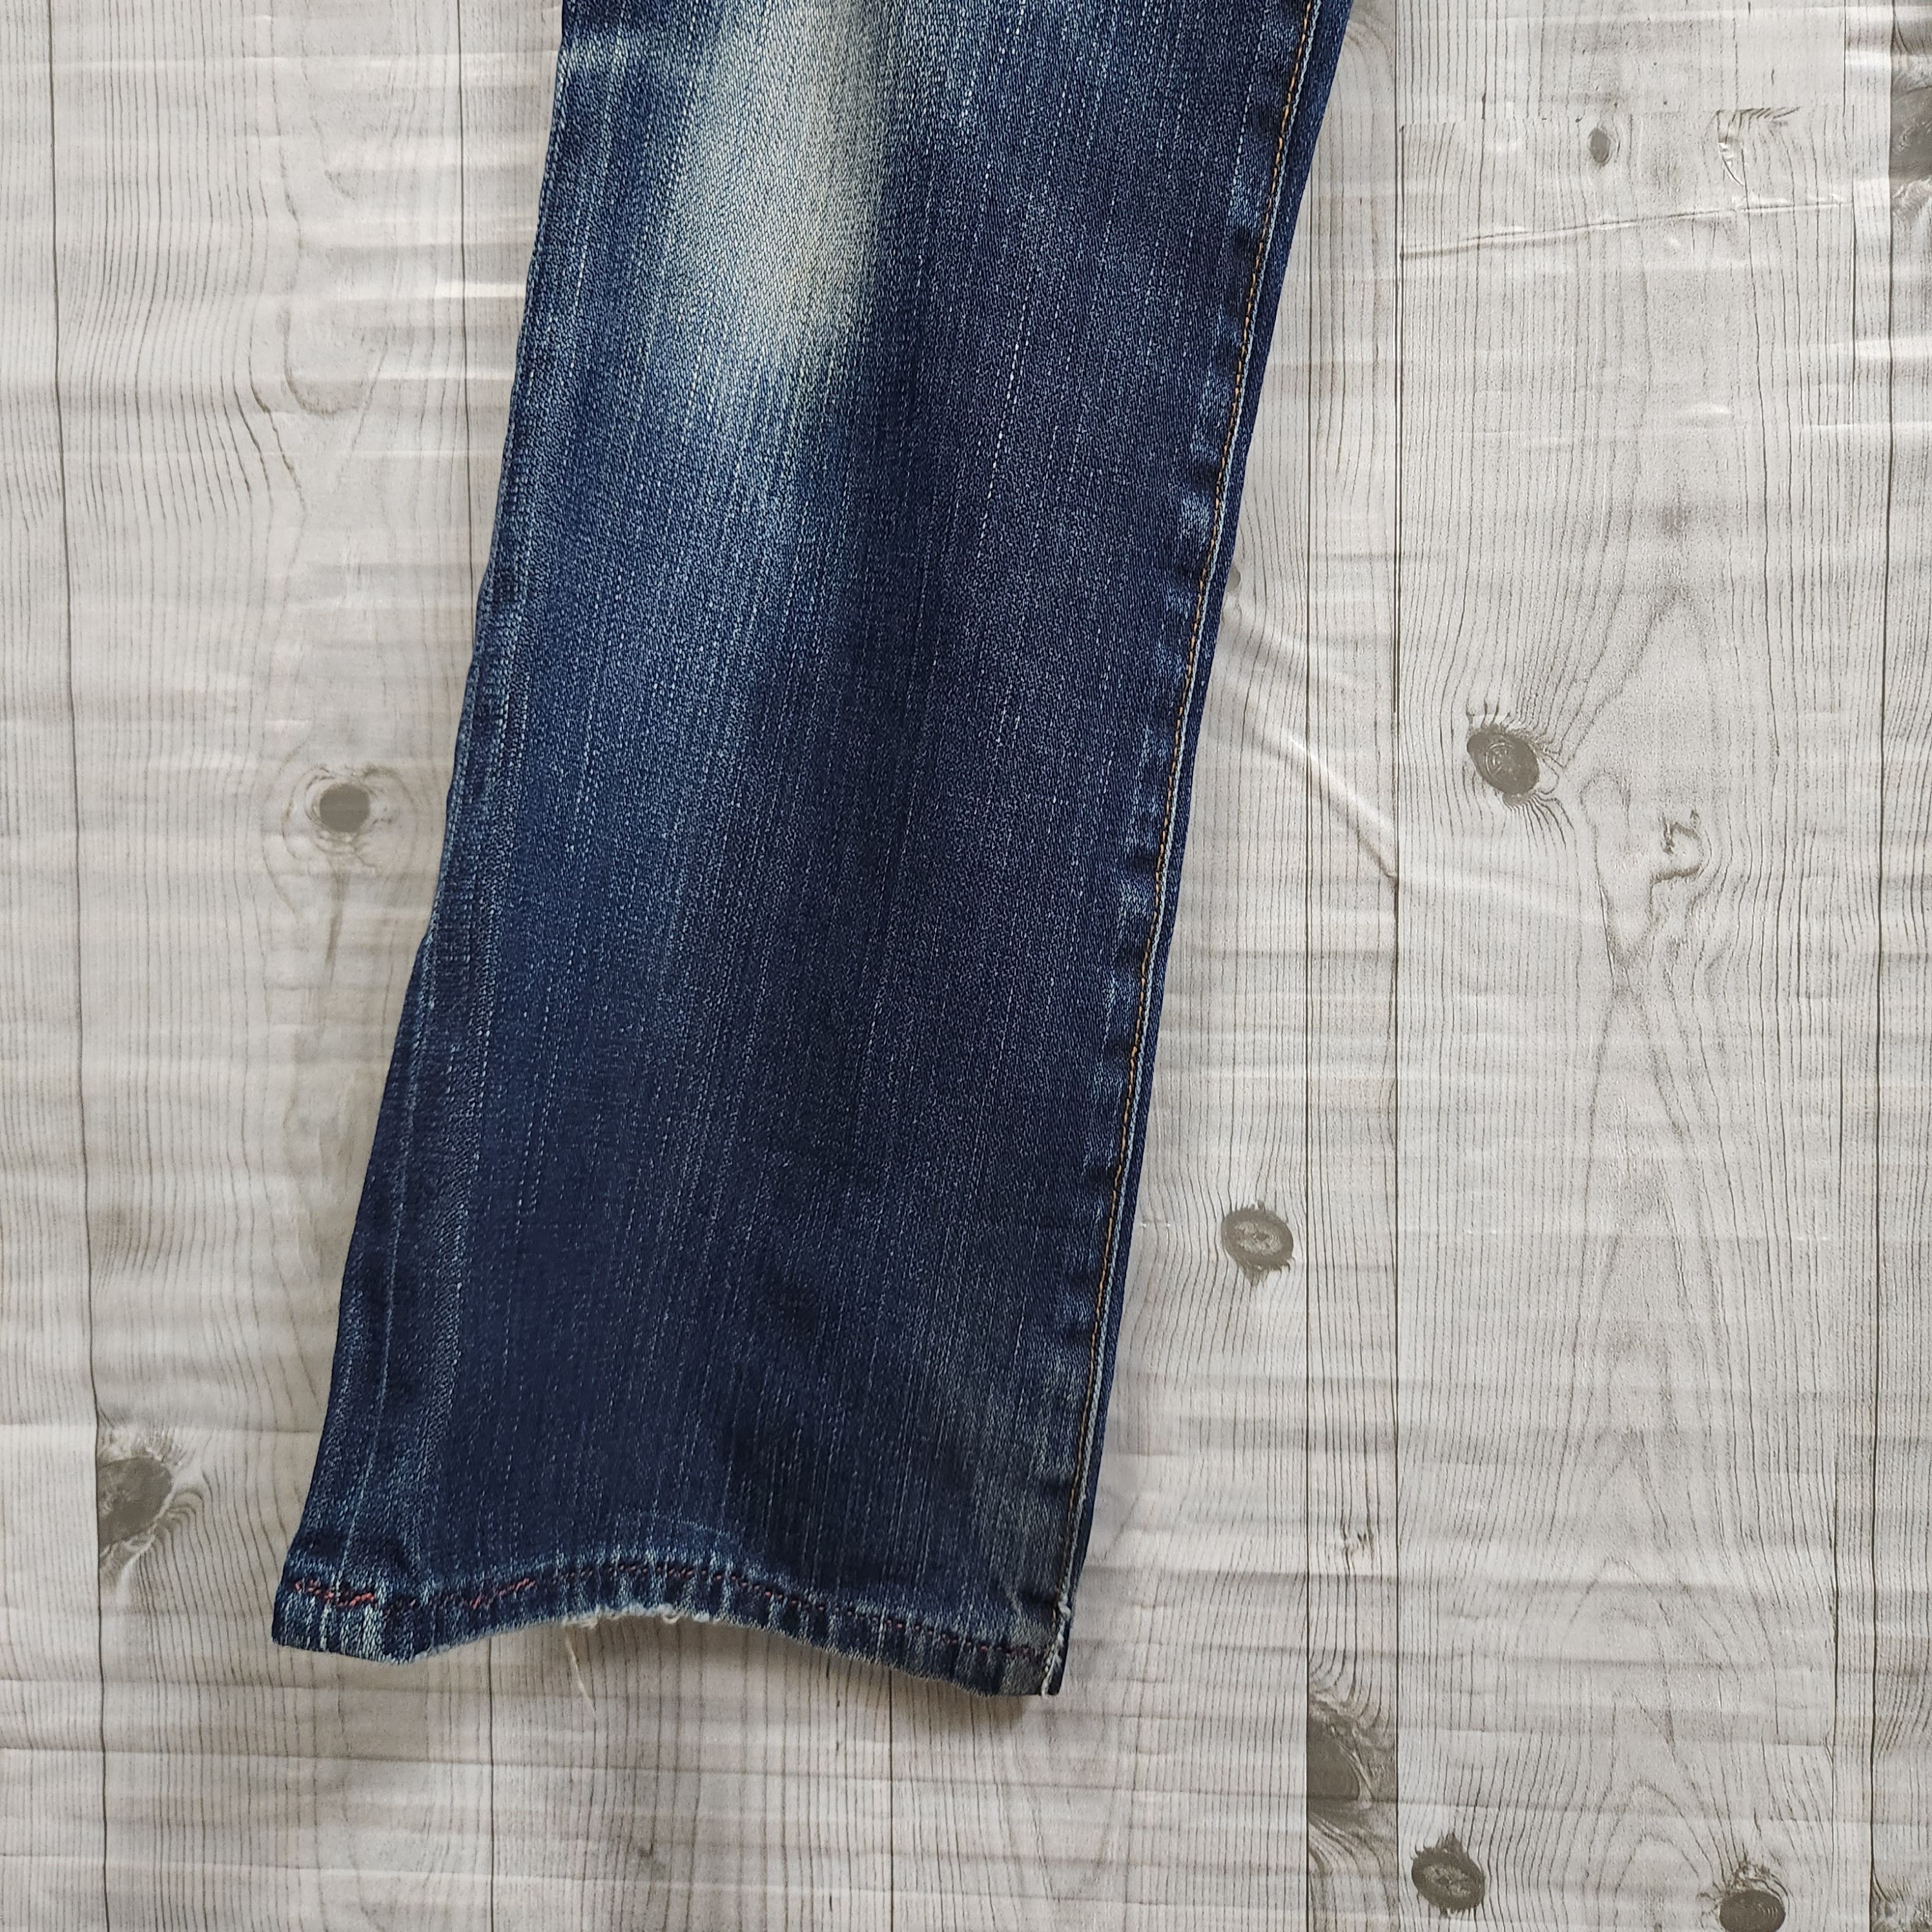 Vintage Levis 517 Premium Denim Jeans Year 2006 - 17